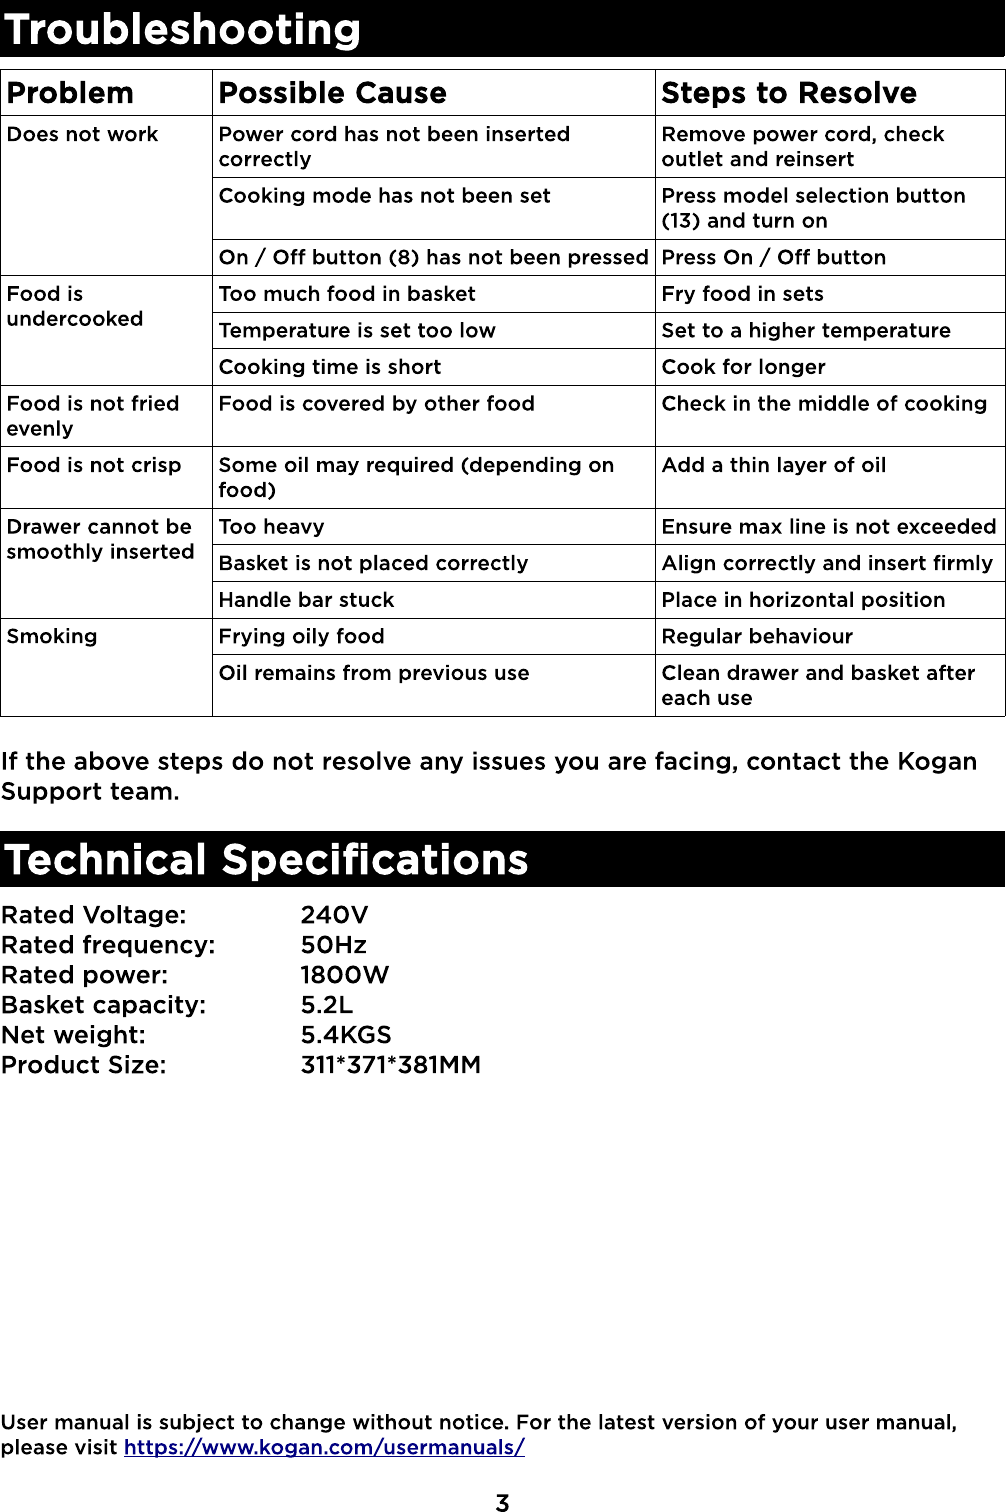 Page 4 of 9 - KA5LDGAFRYA 5.2L Digital Low Fat 1800W Air Fryer User Manual  KA5LDGAFRYA-A